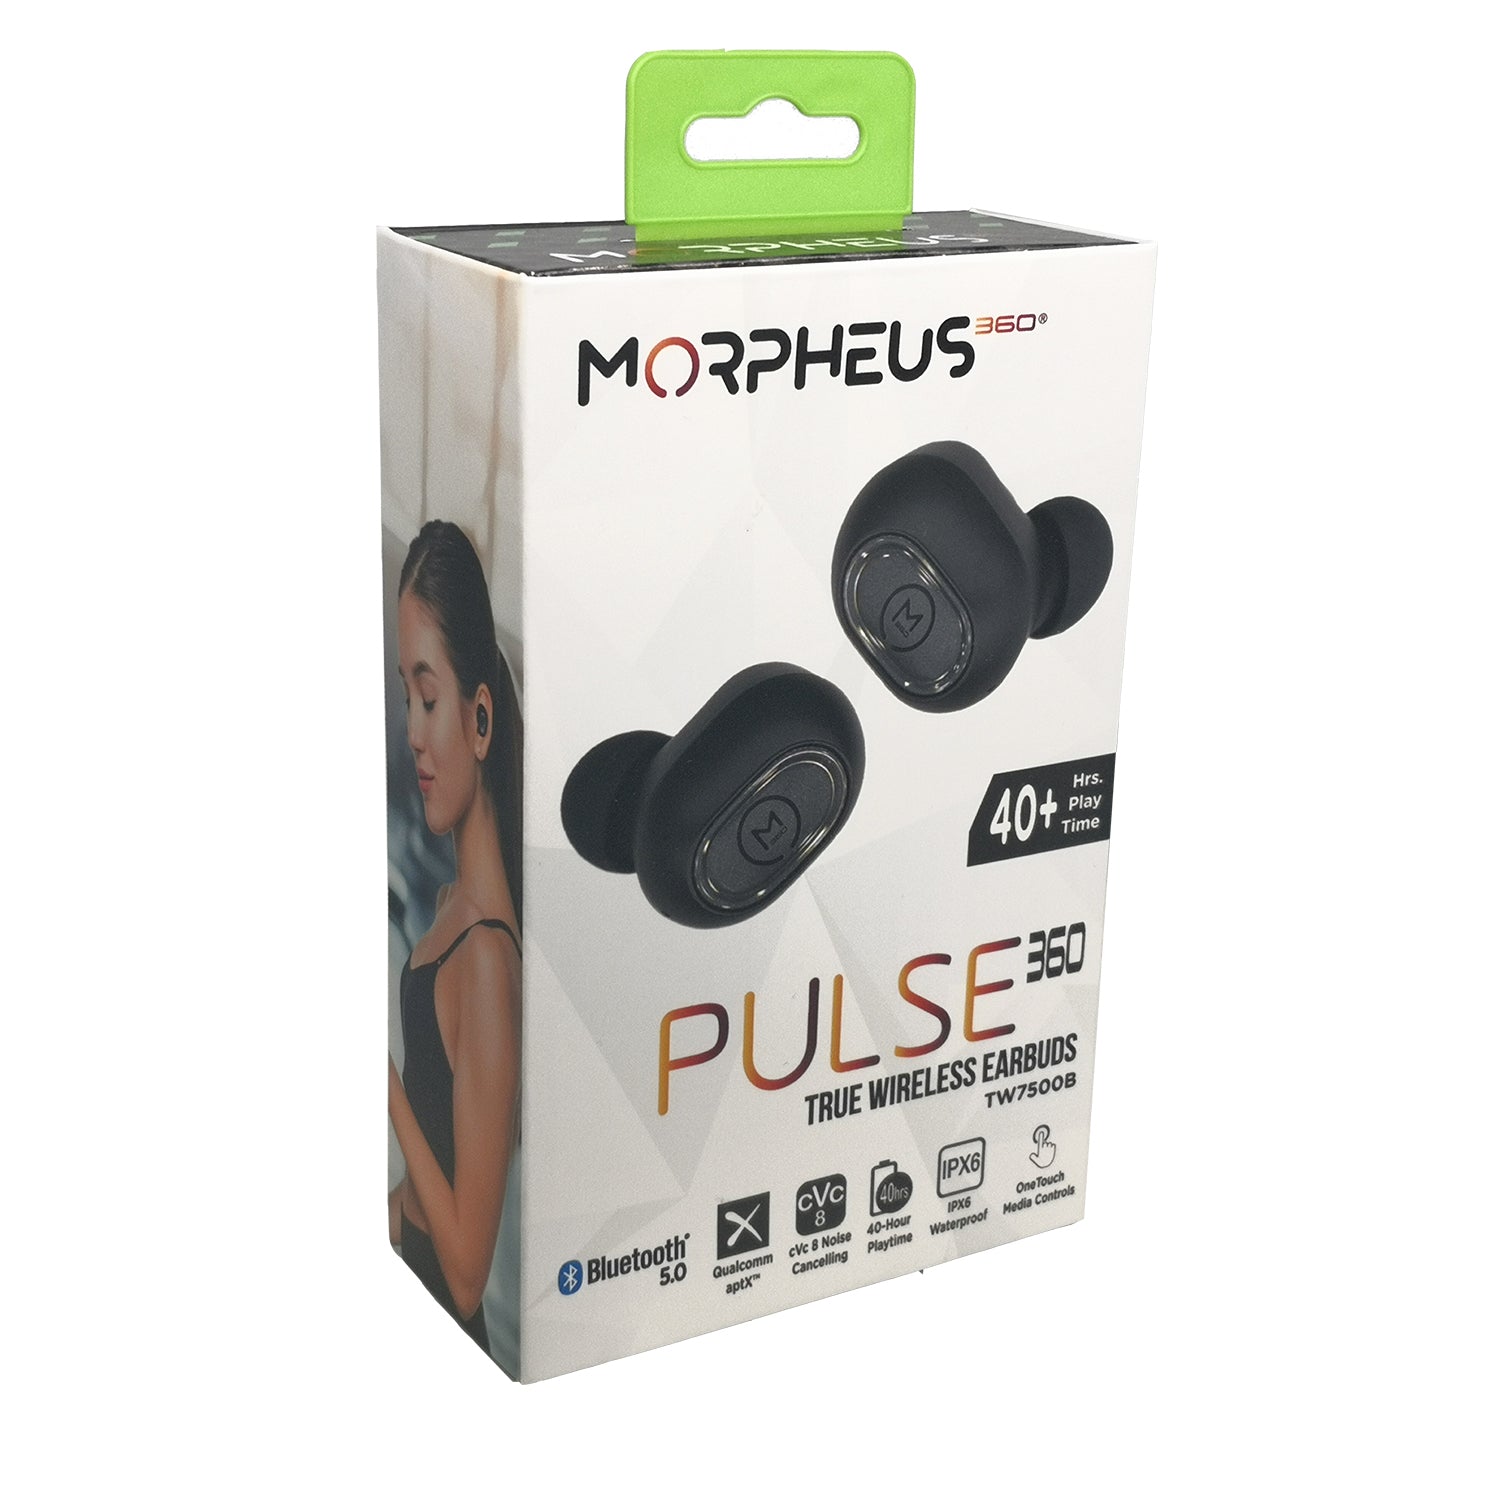 Morpheus 360 Pulse 360 True Wireless Earbuds - Bluetooth Headphones - –  www.